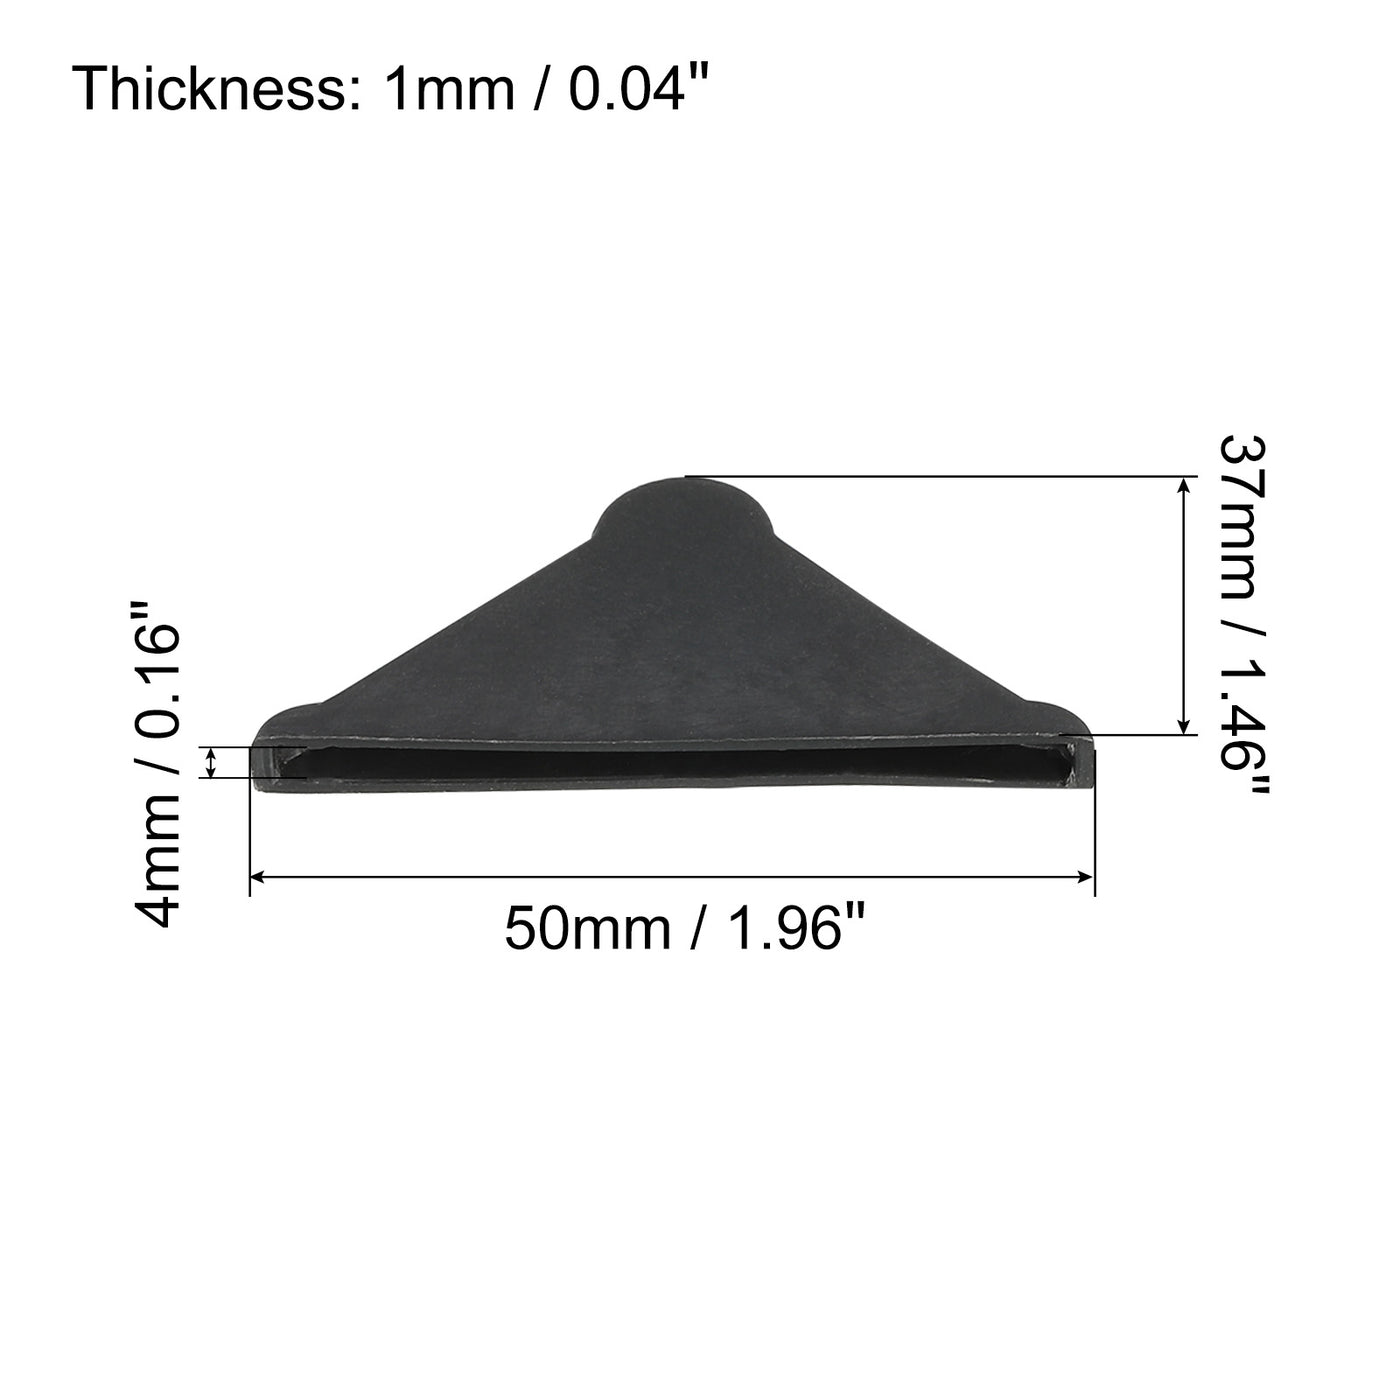 Harfington PP Corner Protector Triangle 37x4mm for Ceramic, Glass, Metal Sheets Black 30pcs